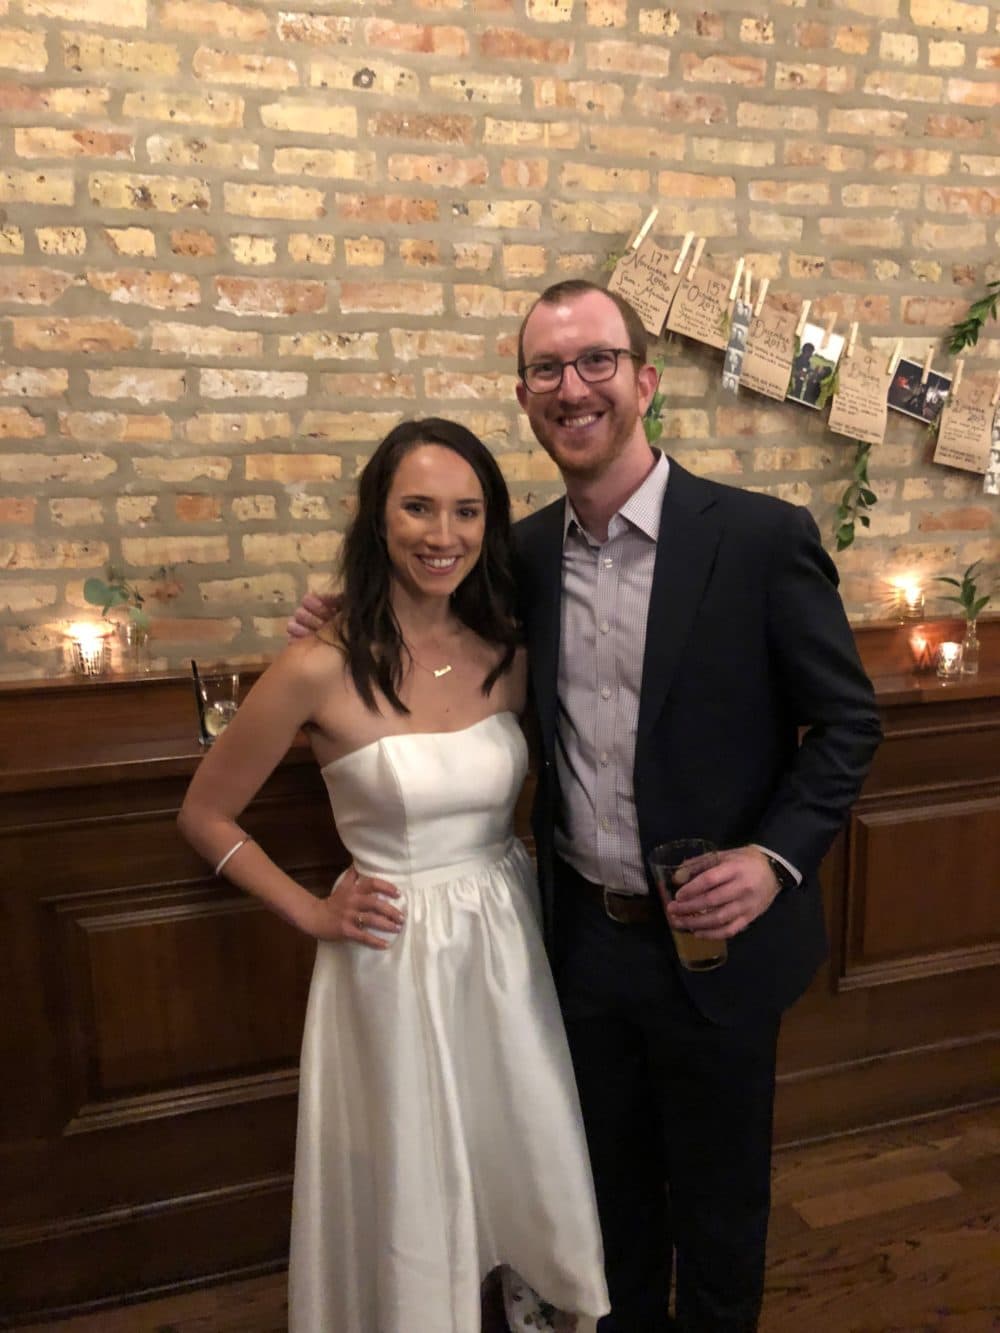 Kevin and Marina at her wedding, 2018